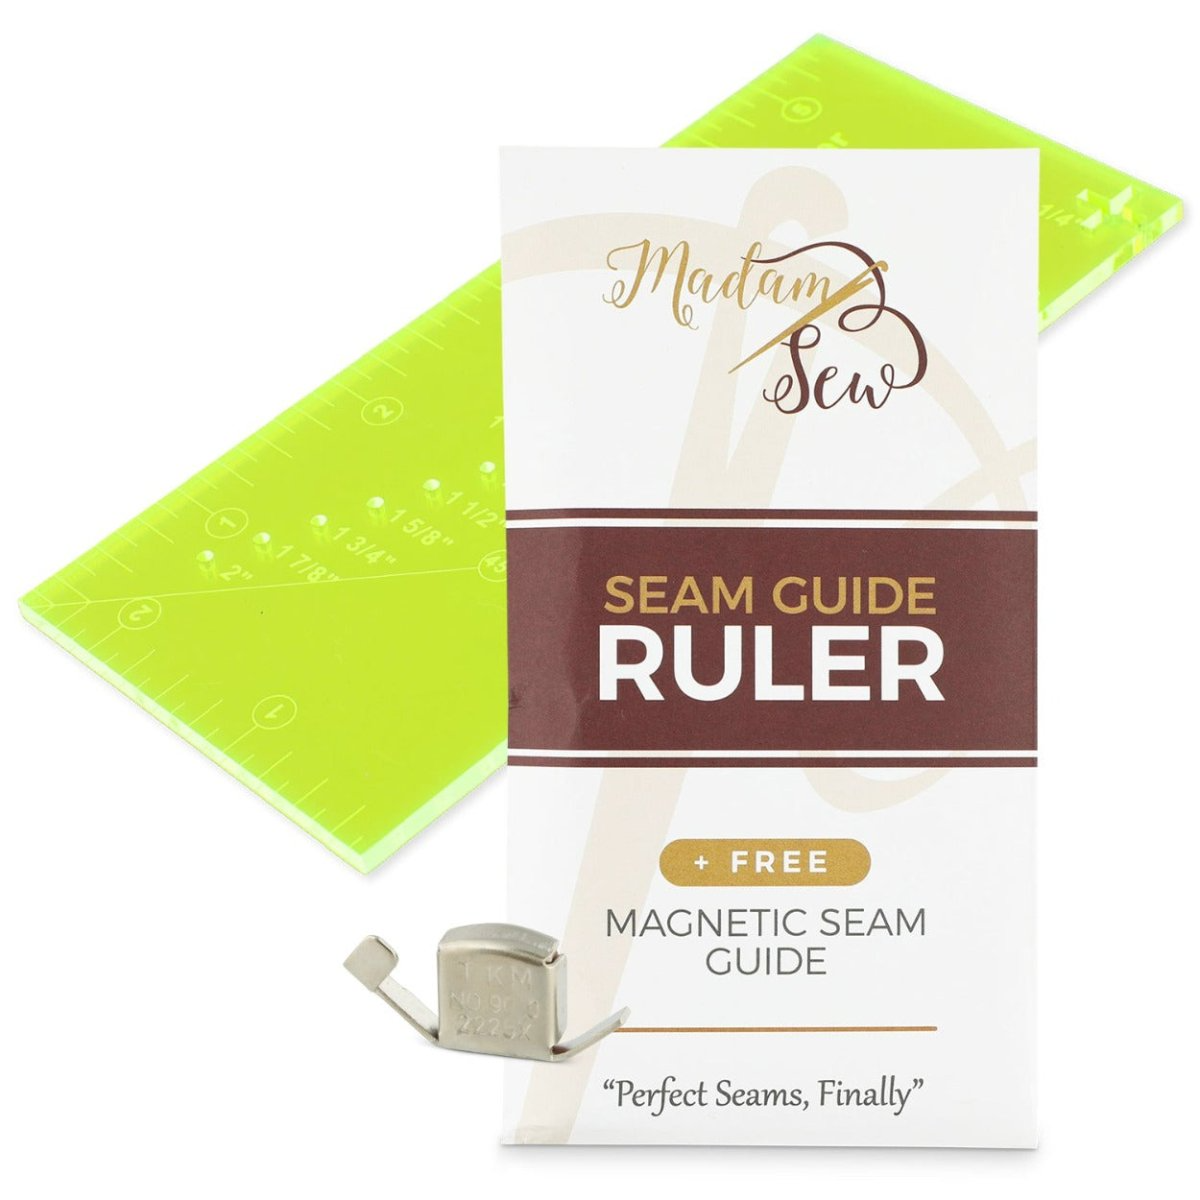 Seam Guide Ruler + FREE Magnetic Seam Guide - Bundle 3 Items